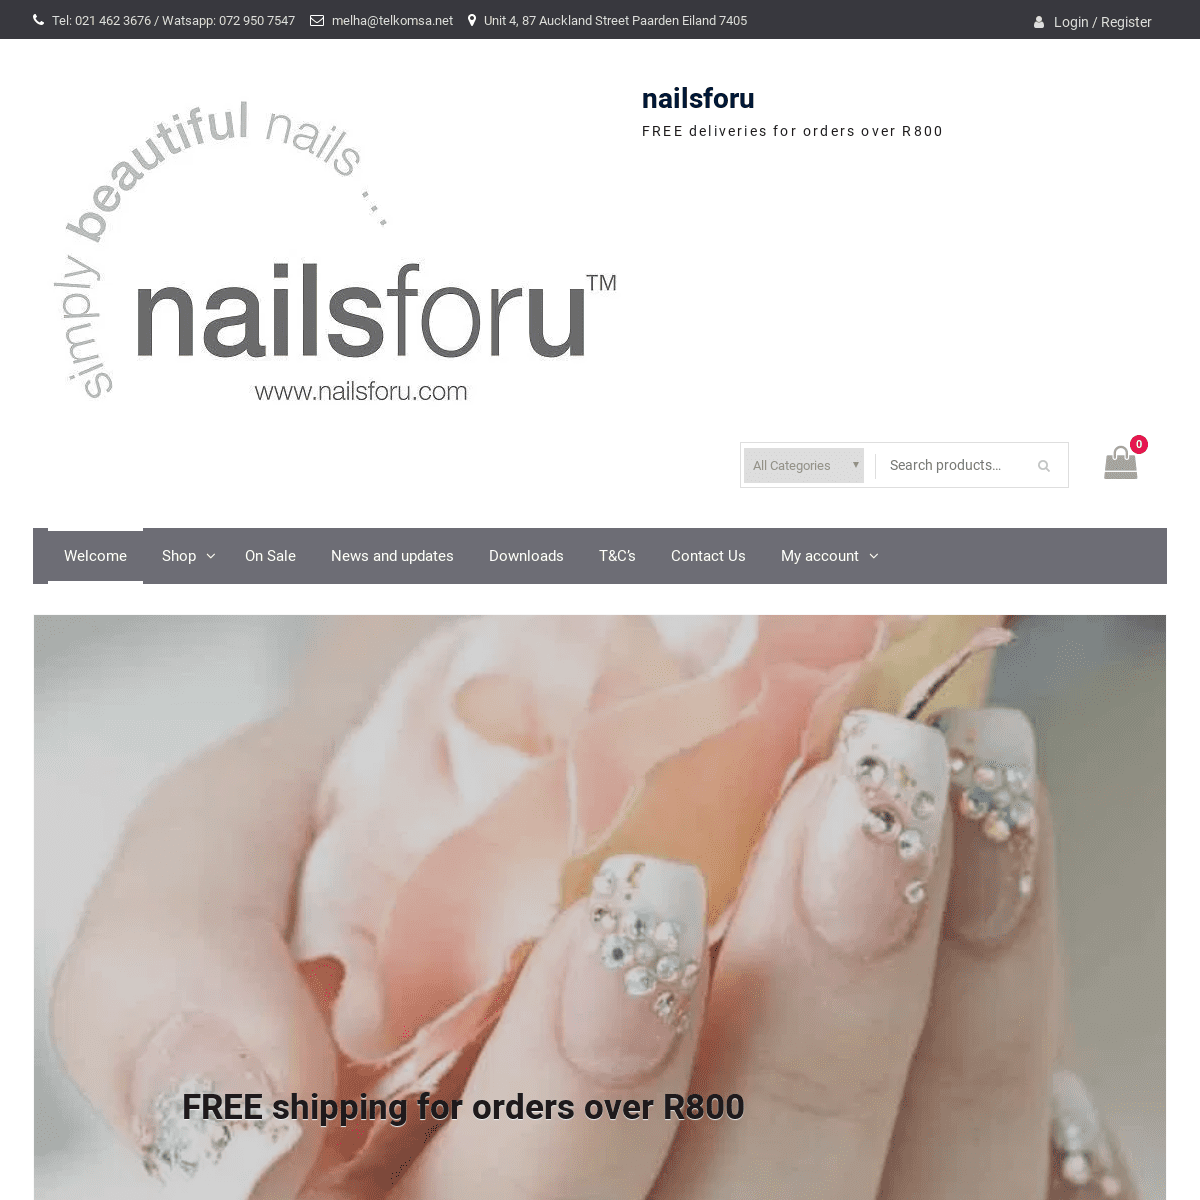 A complete backup of nailsforu.com